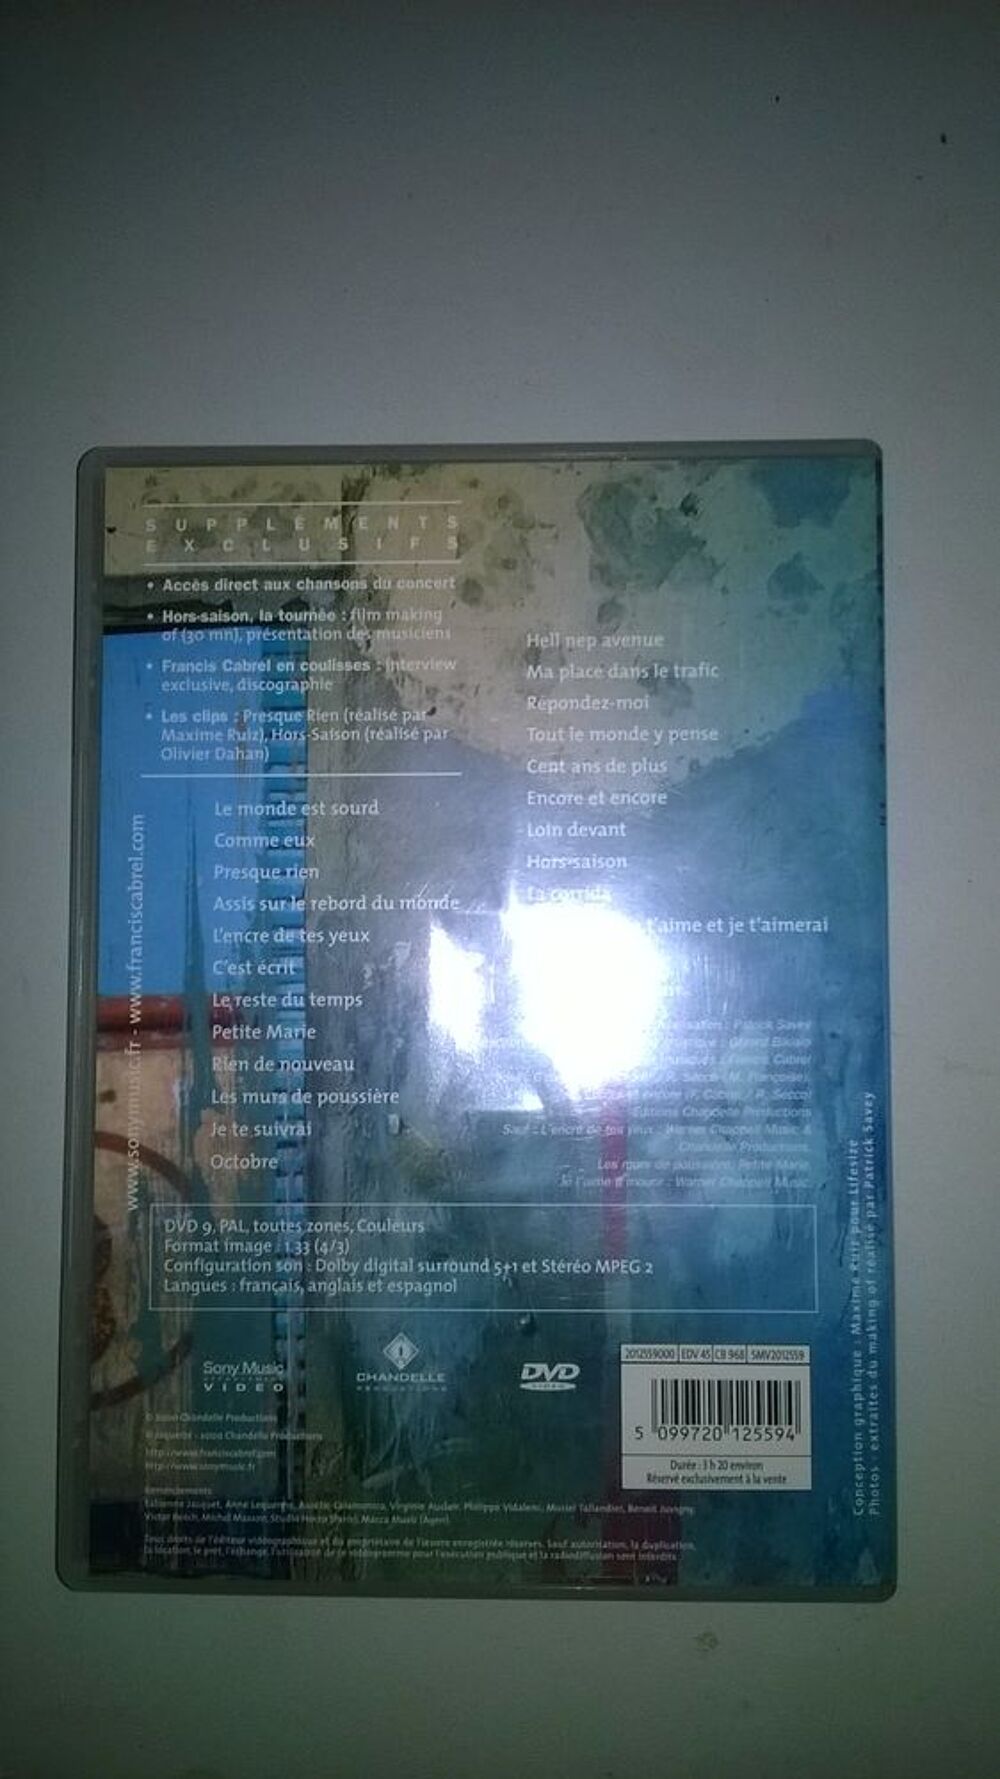 DVD Francis Cabrel
Tourn&eacute;e Hors-Saison
2000
DVD et blu-ray